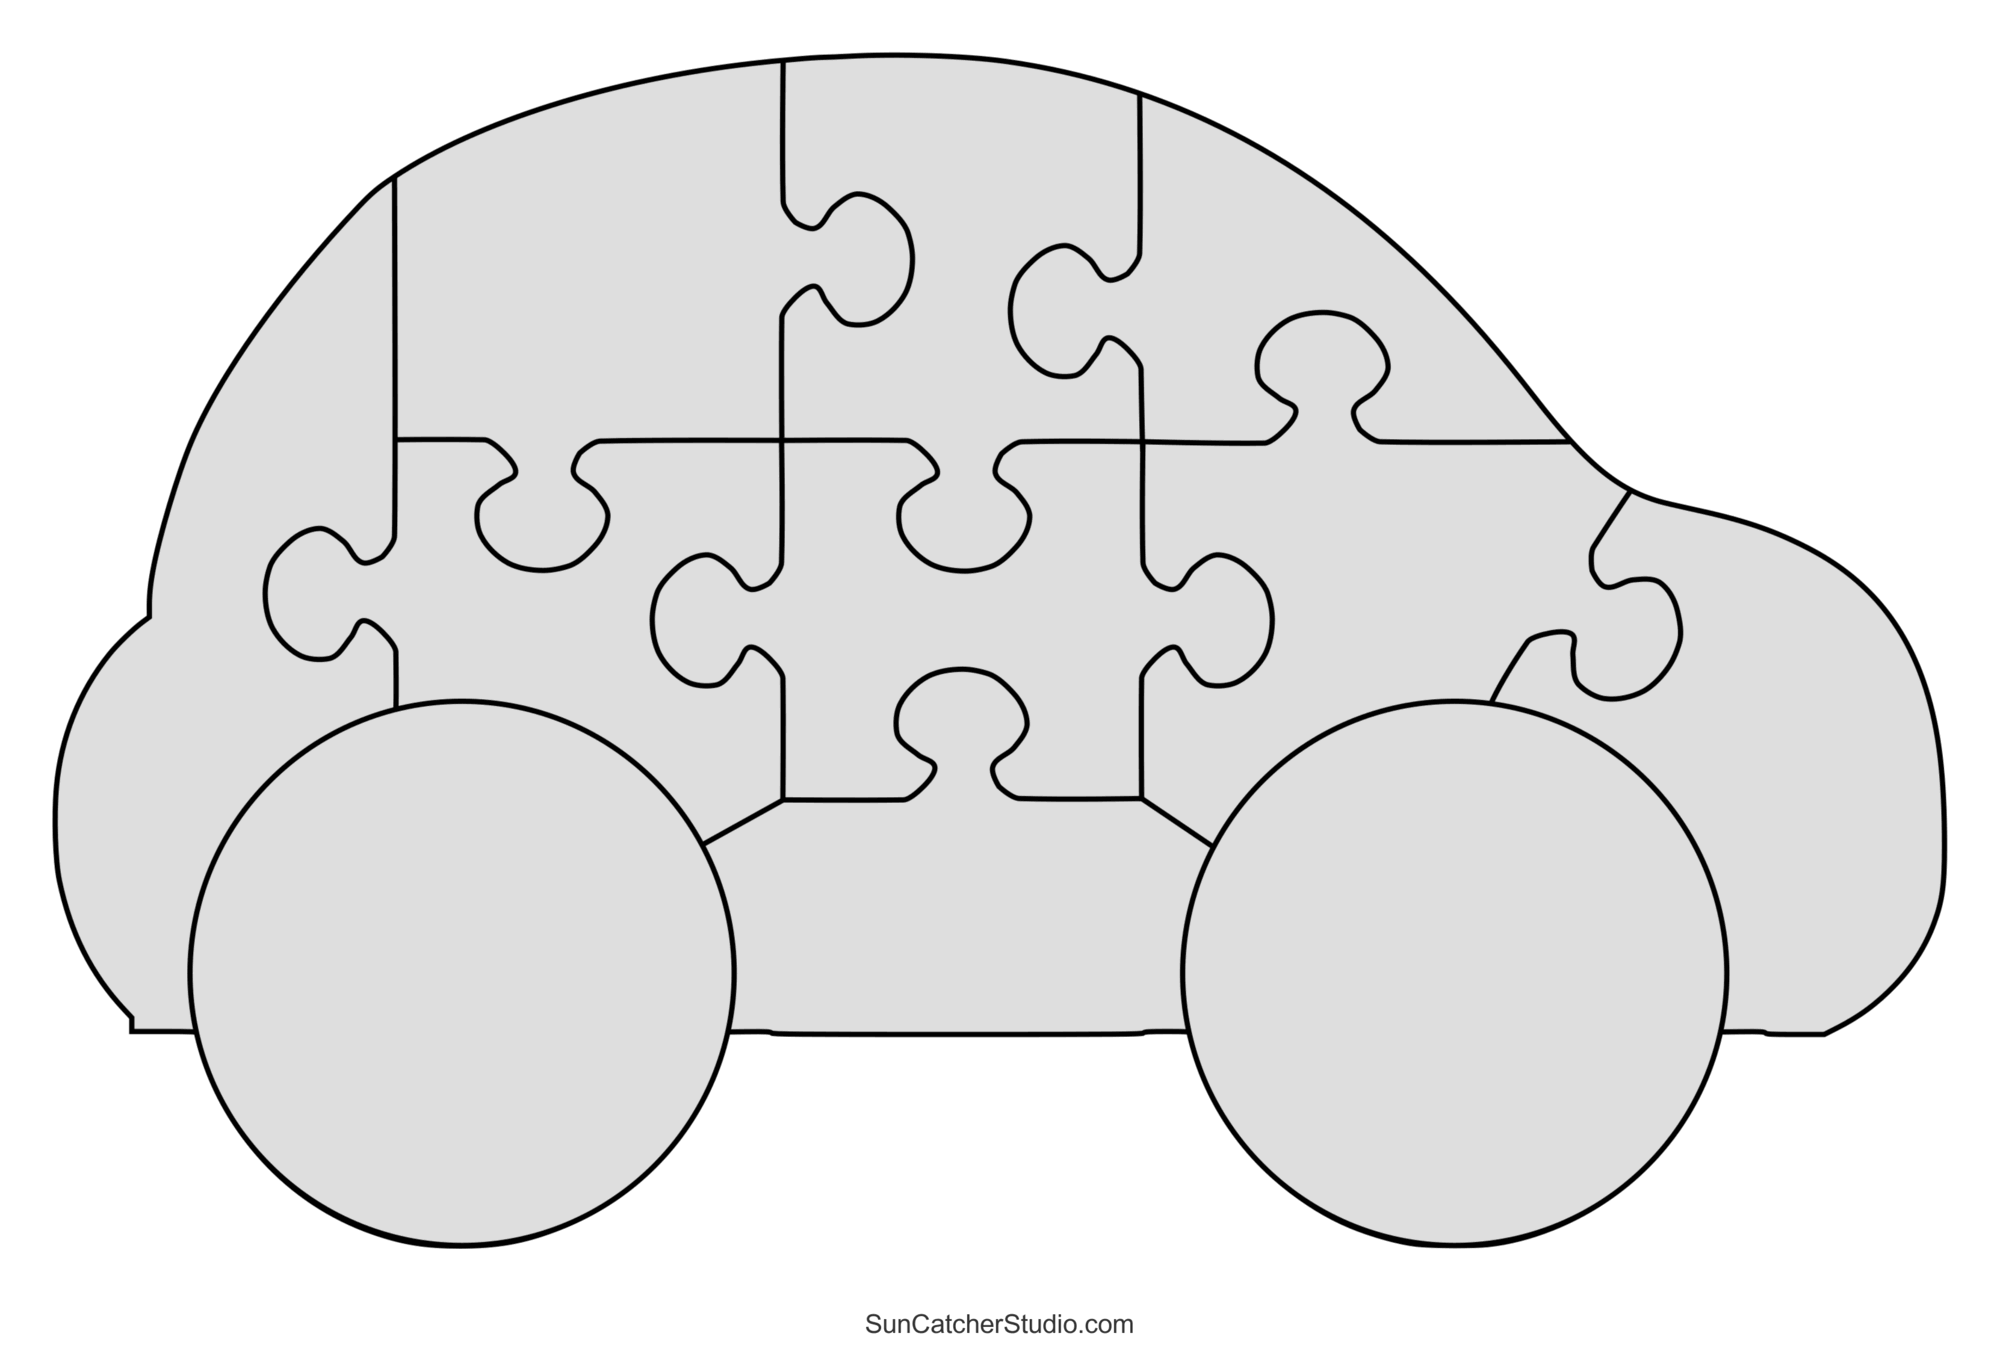 DIY JigSaw Puzzles (Free Patterns, Stencils & Templates) – DIY